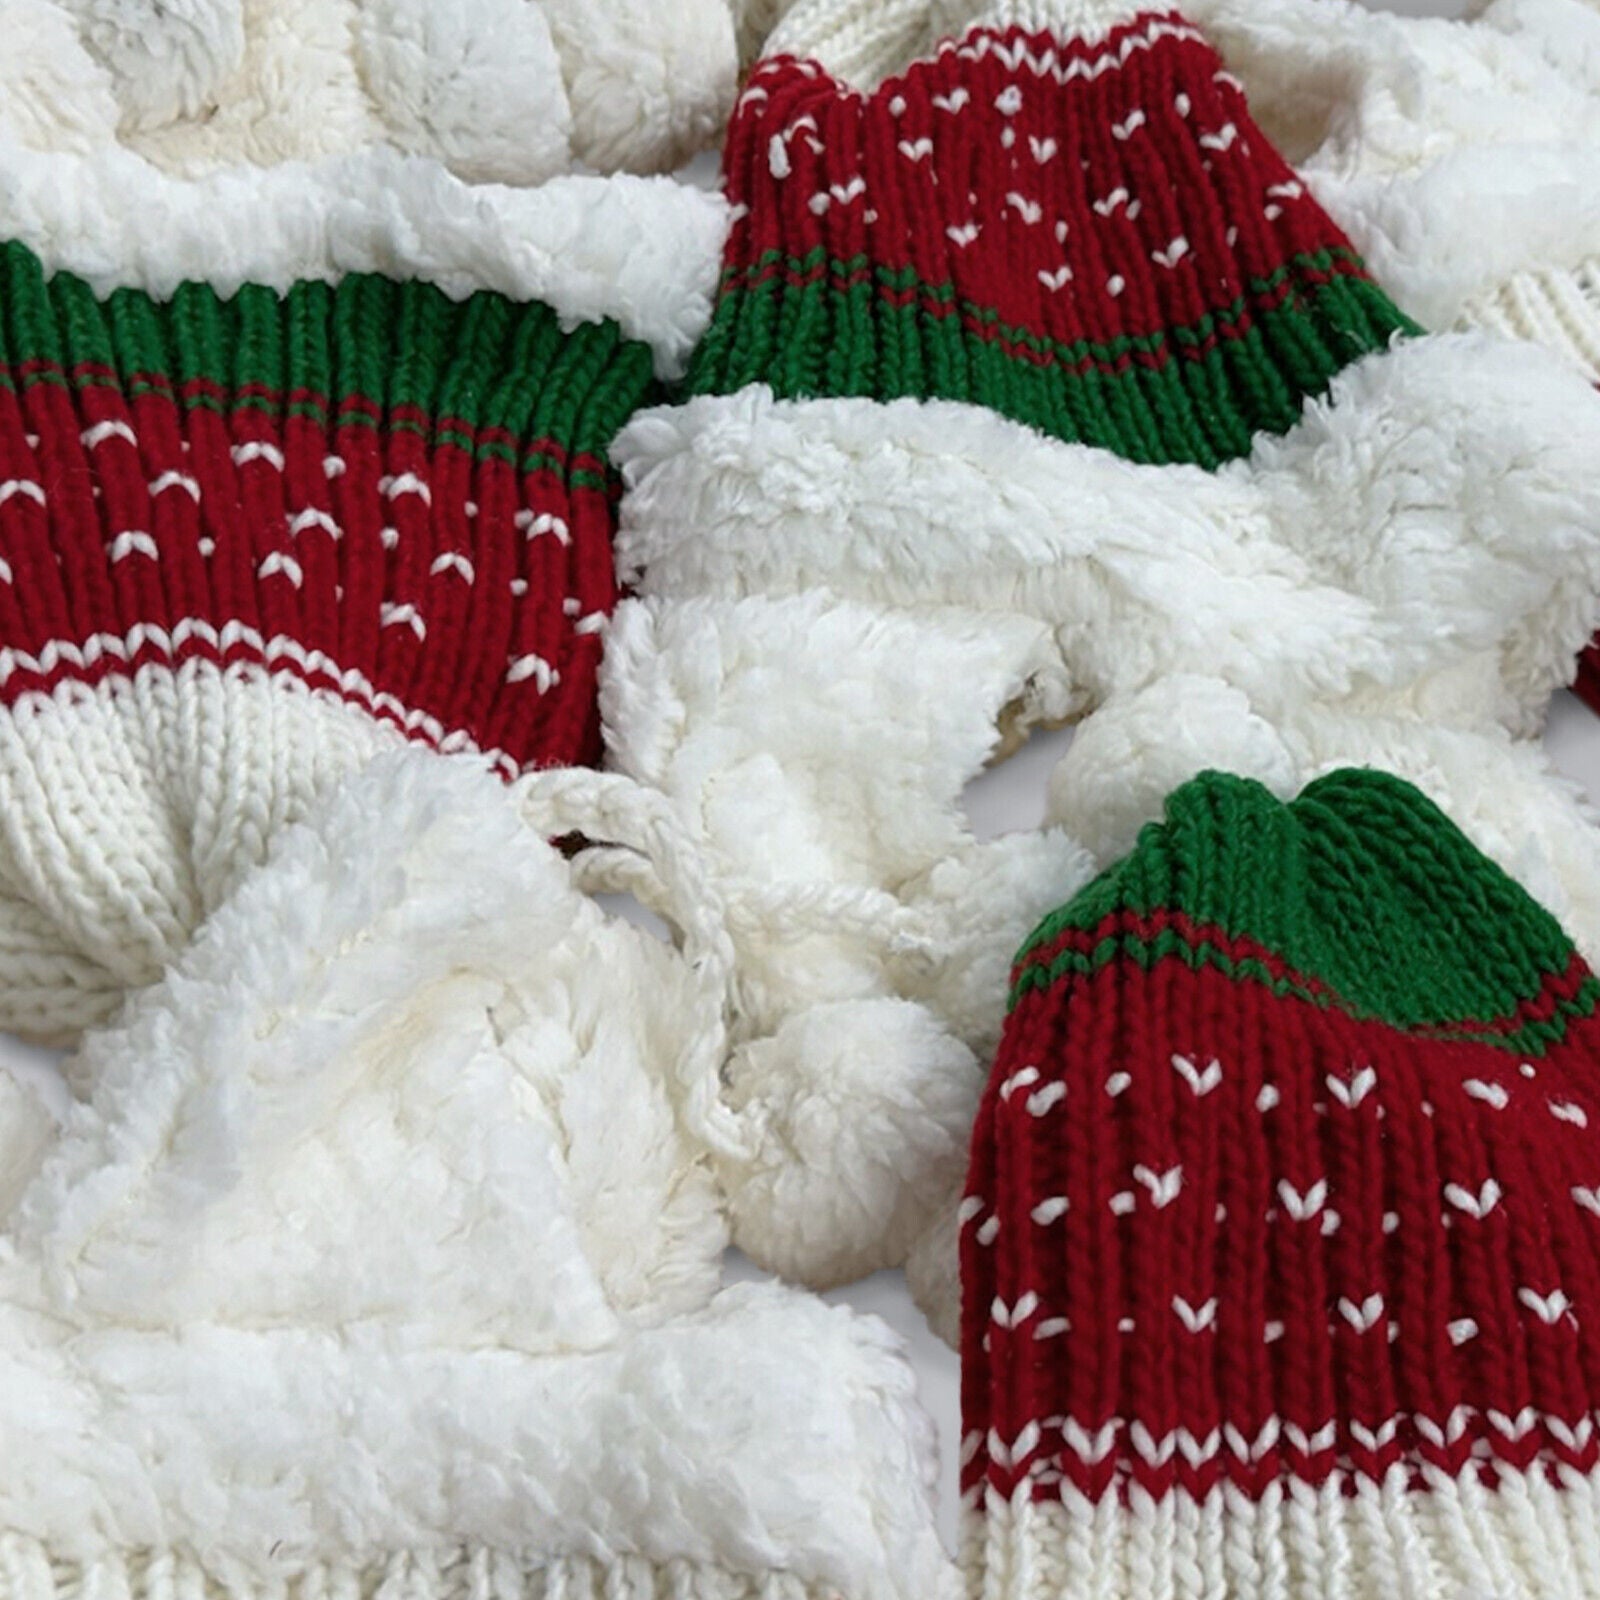 FREE Babahoyo Cable Knit Alpaca Wool Unisex Chullo Beanie Pom Pom Christmas Hat